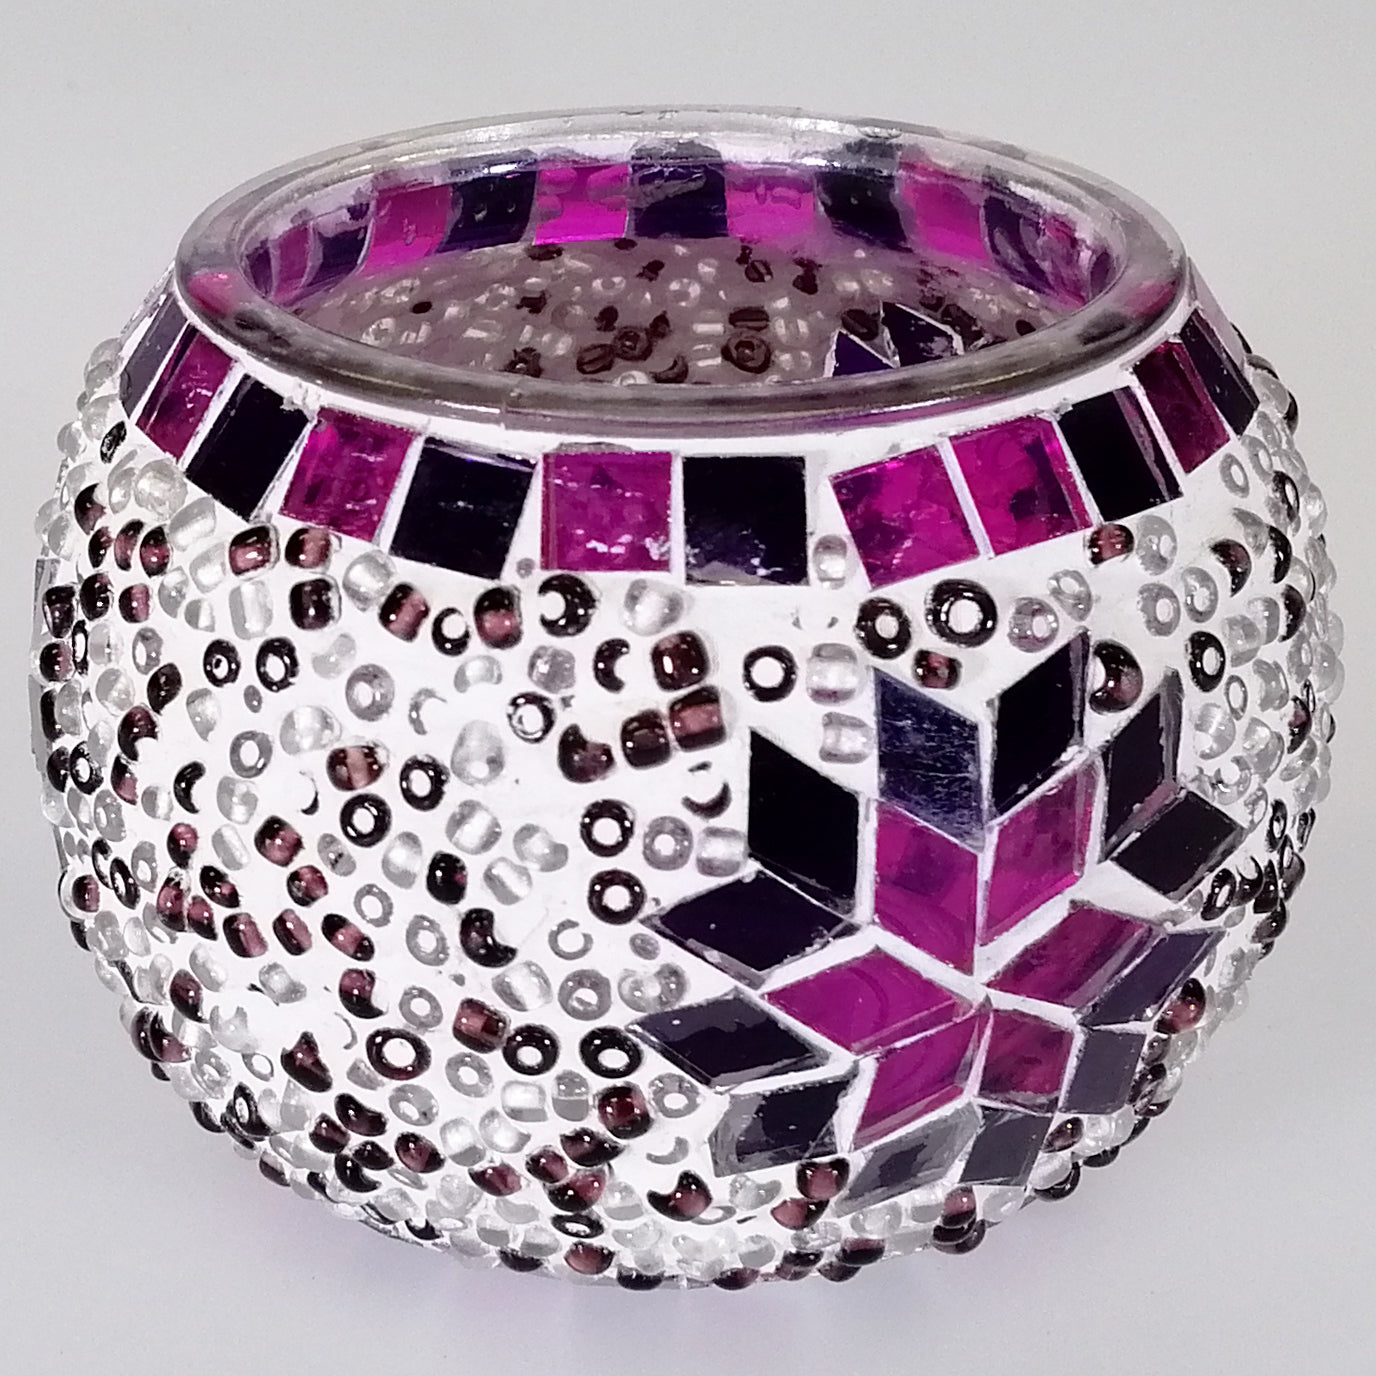 Glass Mosaic Candle Holder - Purple